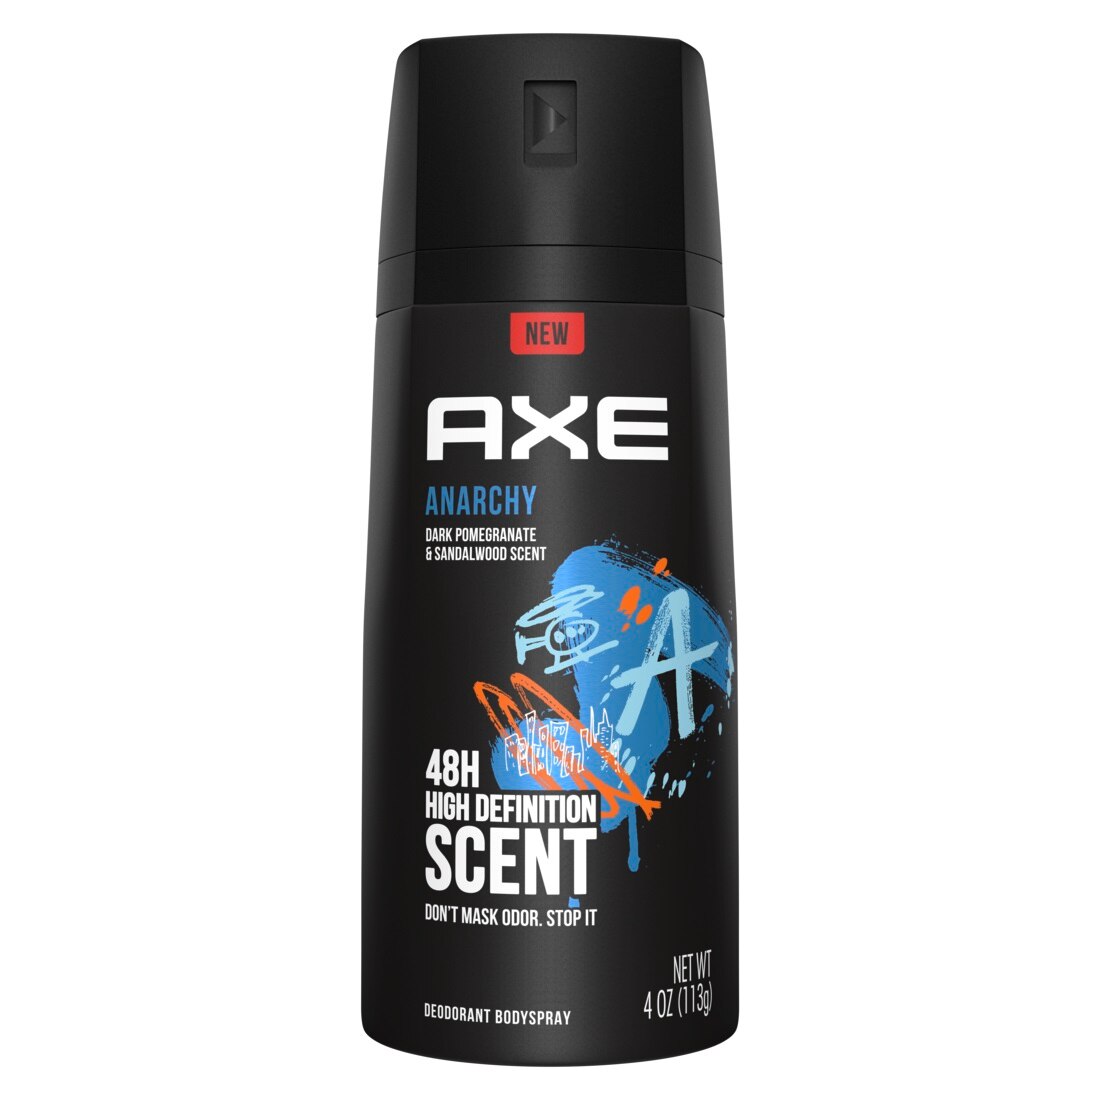 Prestigieus team resultaat AXE Deodorant Body Spray 48-Hour High Definition, Anarchy, 4 OZ | Pick Up  In Store TODAY at CVS